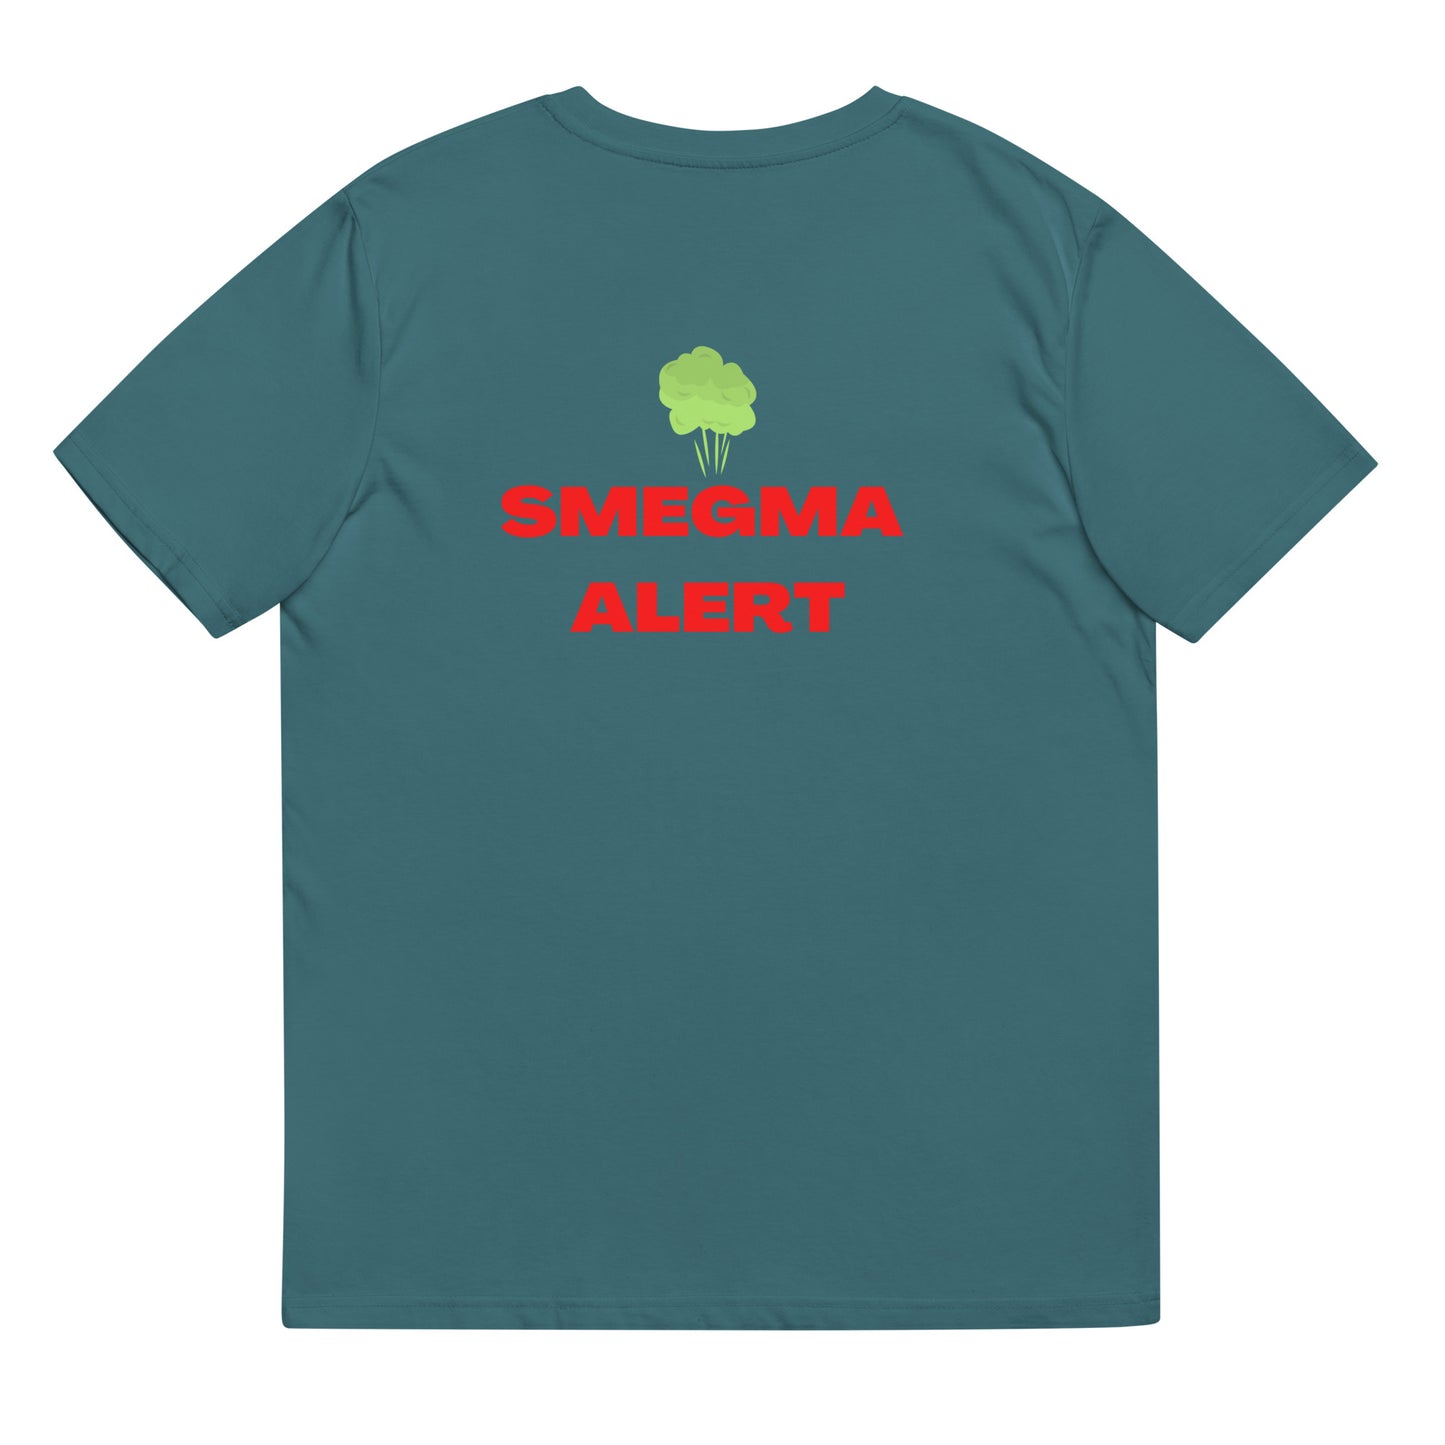 Help Ik Heb Smegma T-shirt